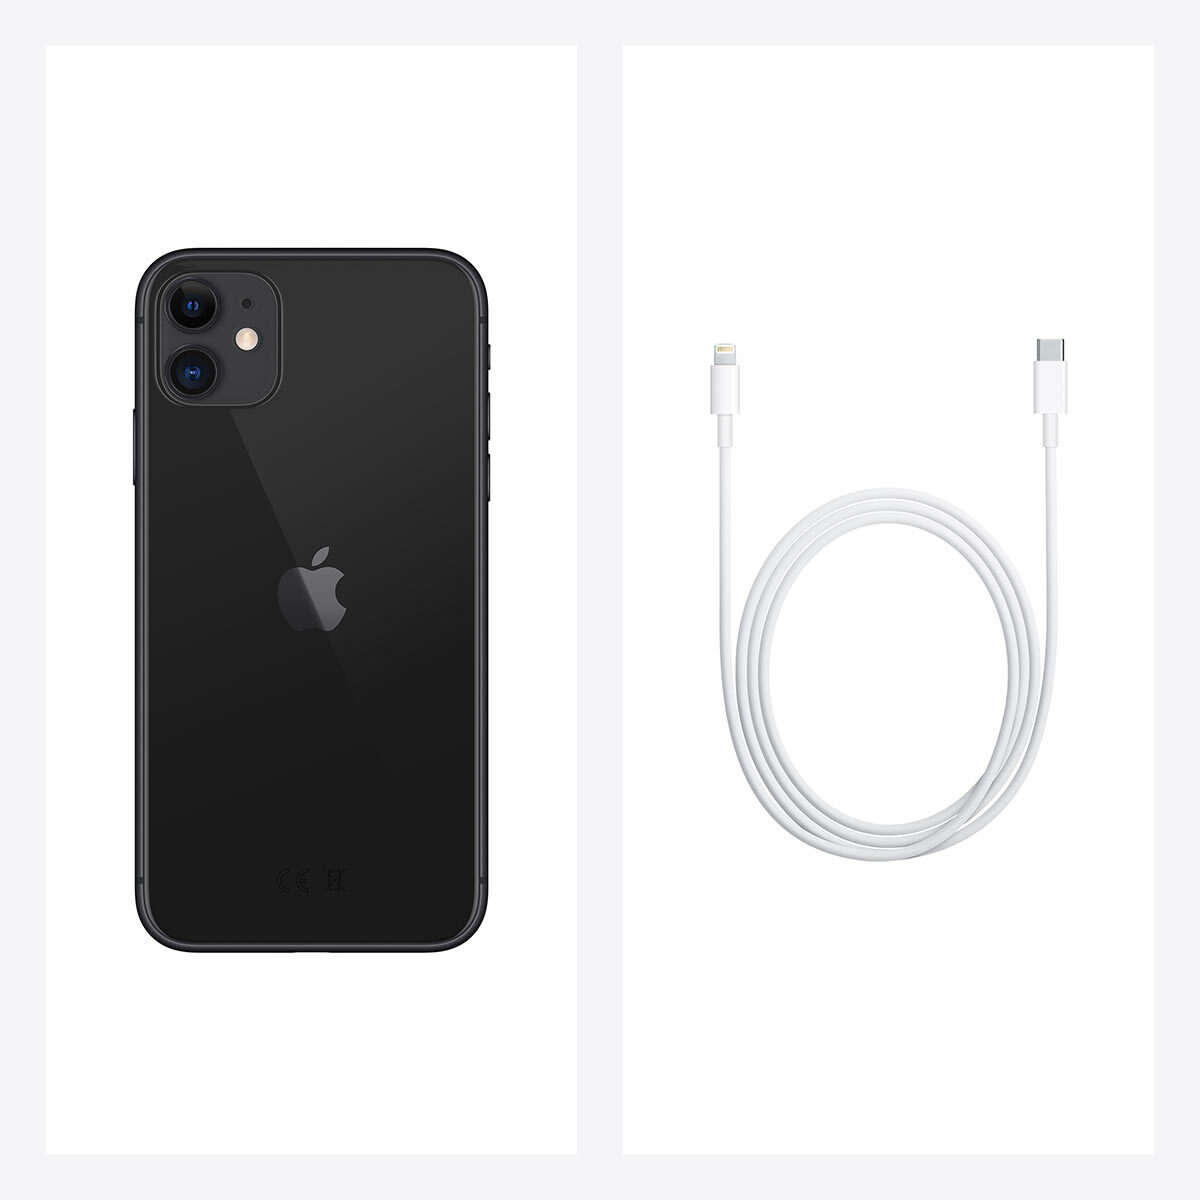 Buy Apple iPhone 11 128GB Sim Free Mobile Phone in Black, MHDH3B/A at costco.co.uk